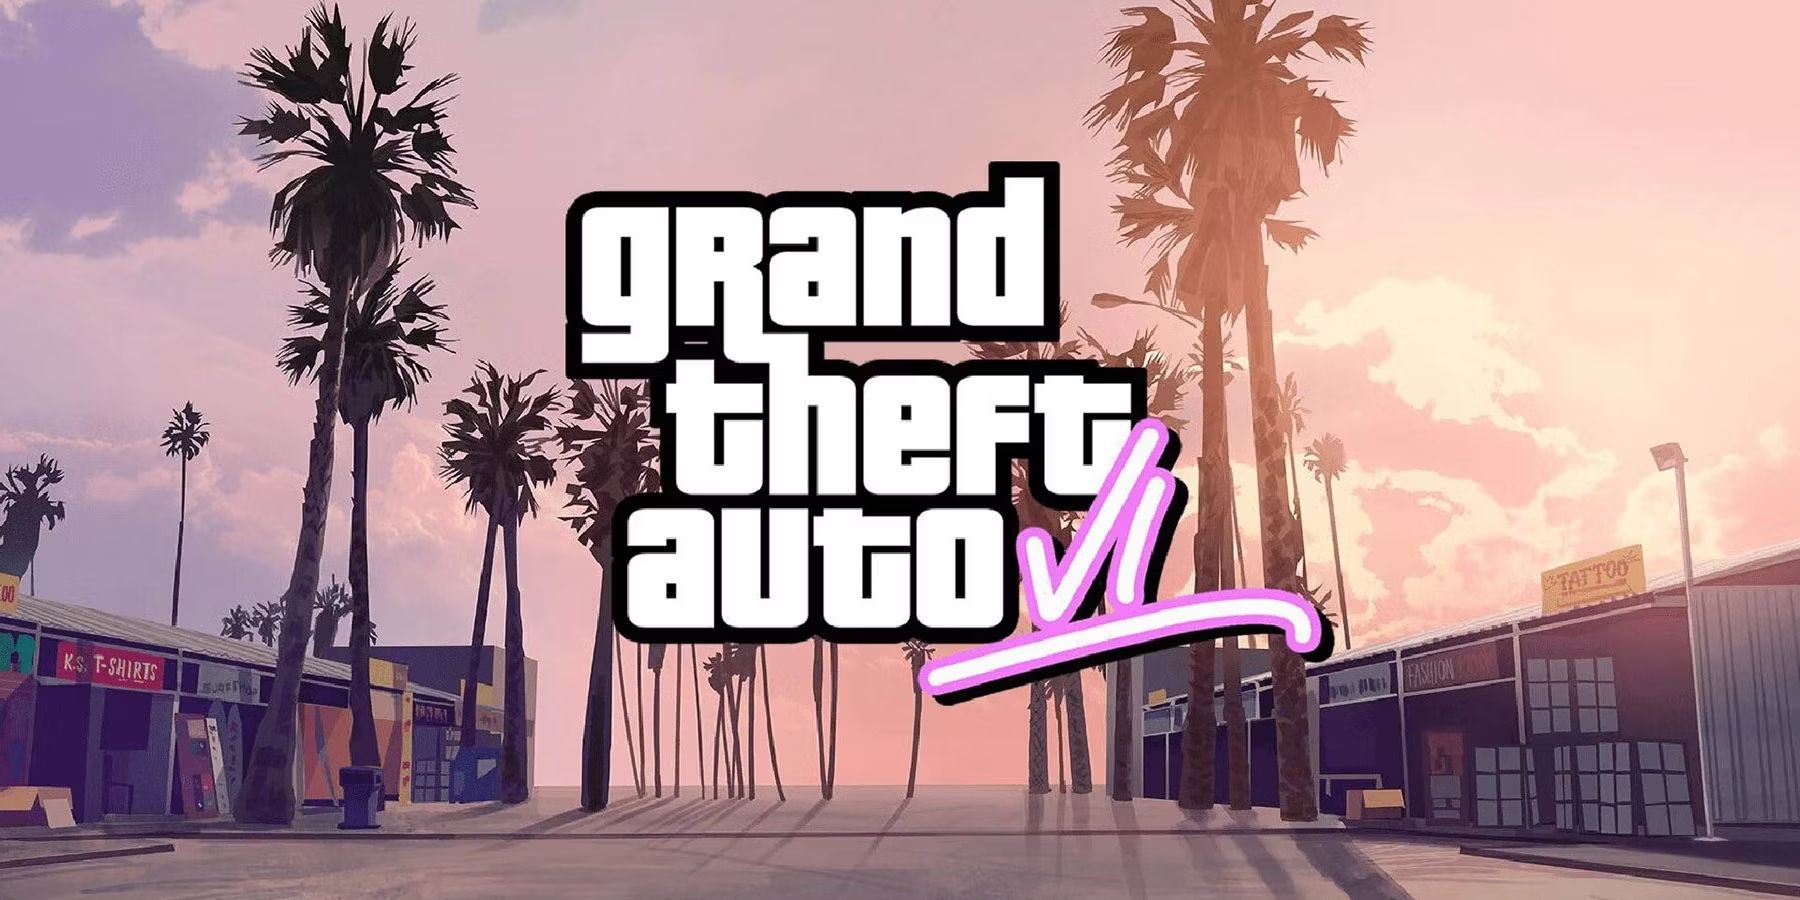 Grand Theft Auto 6 Vice City logo